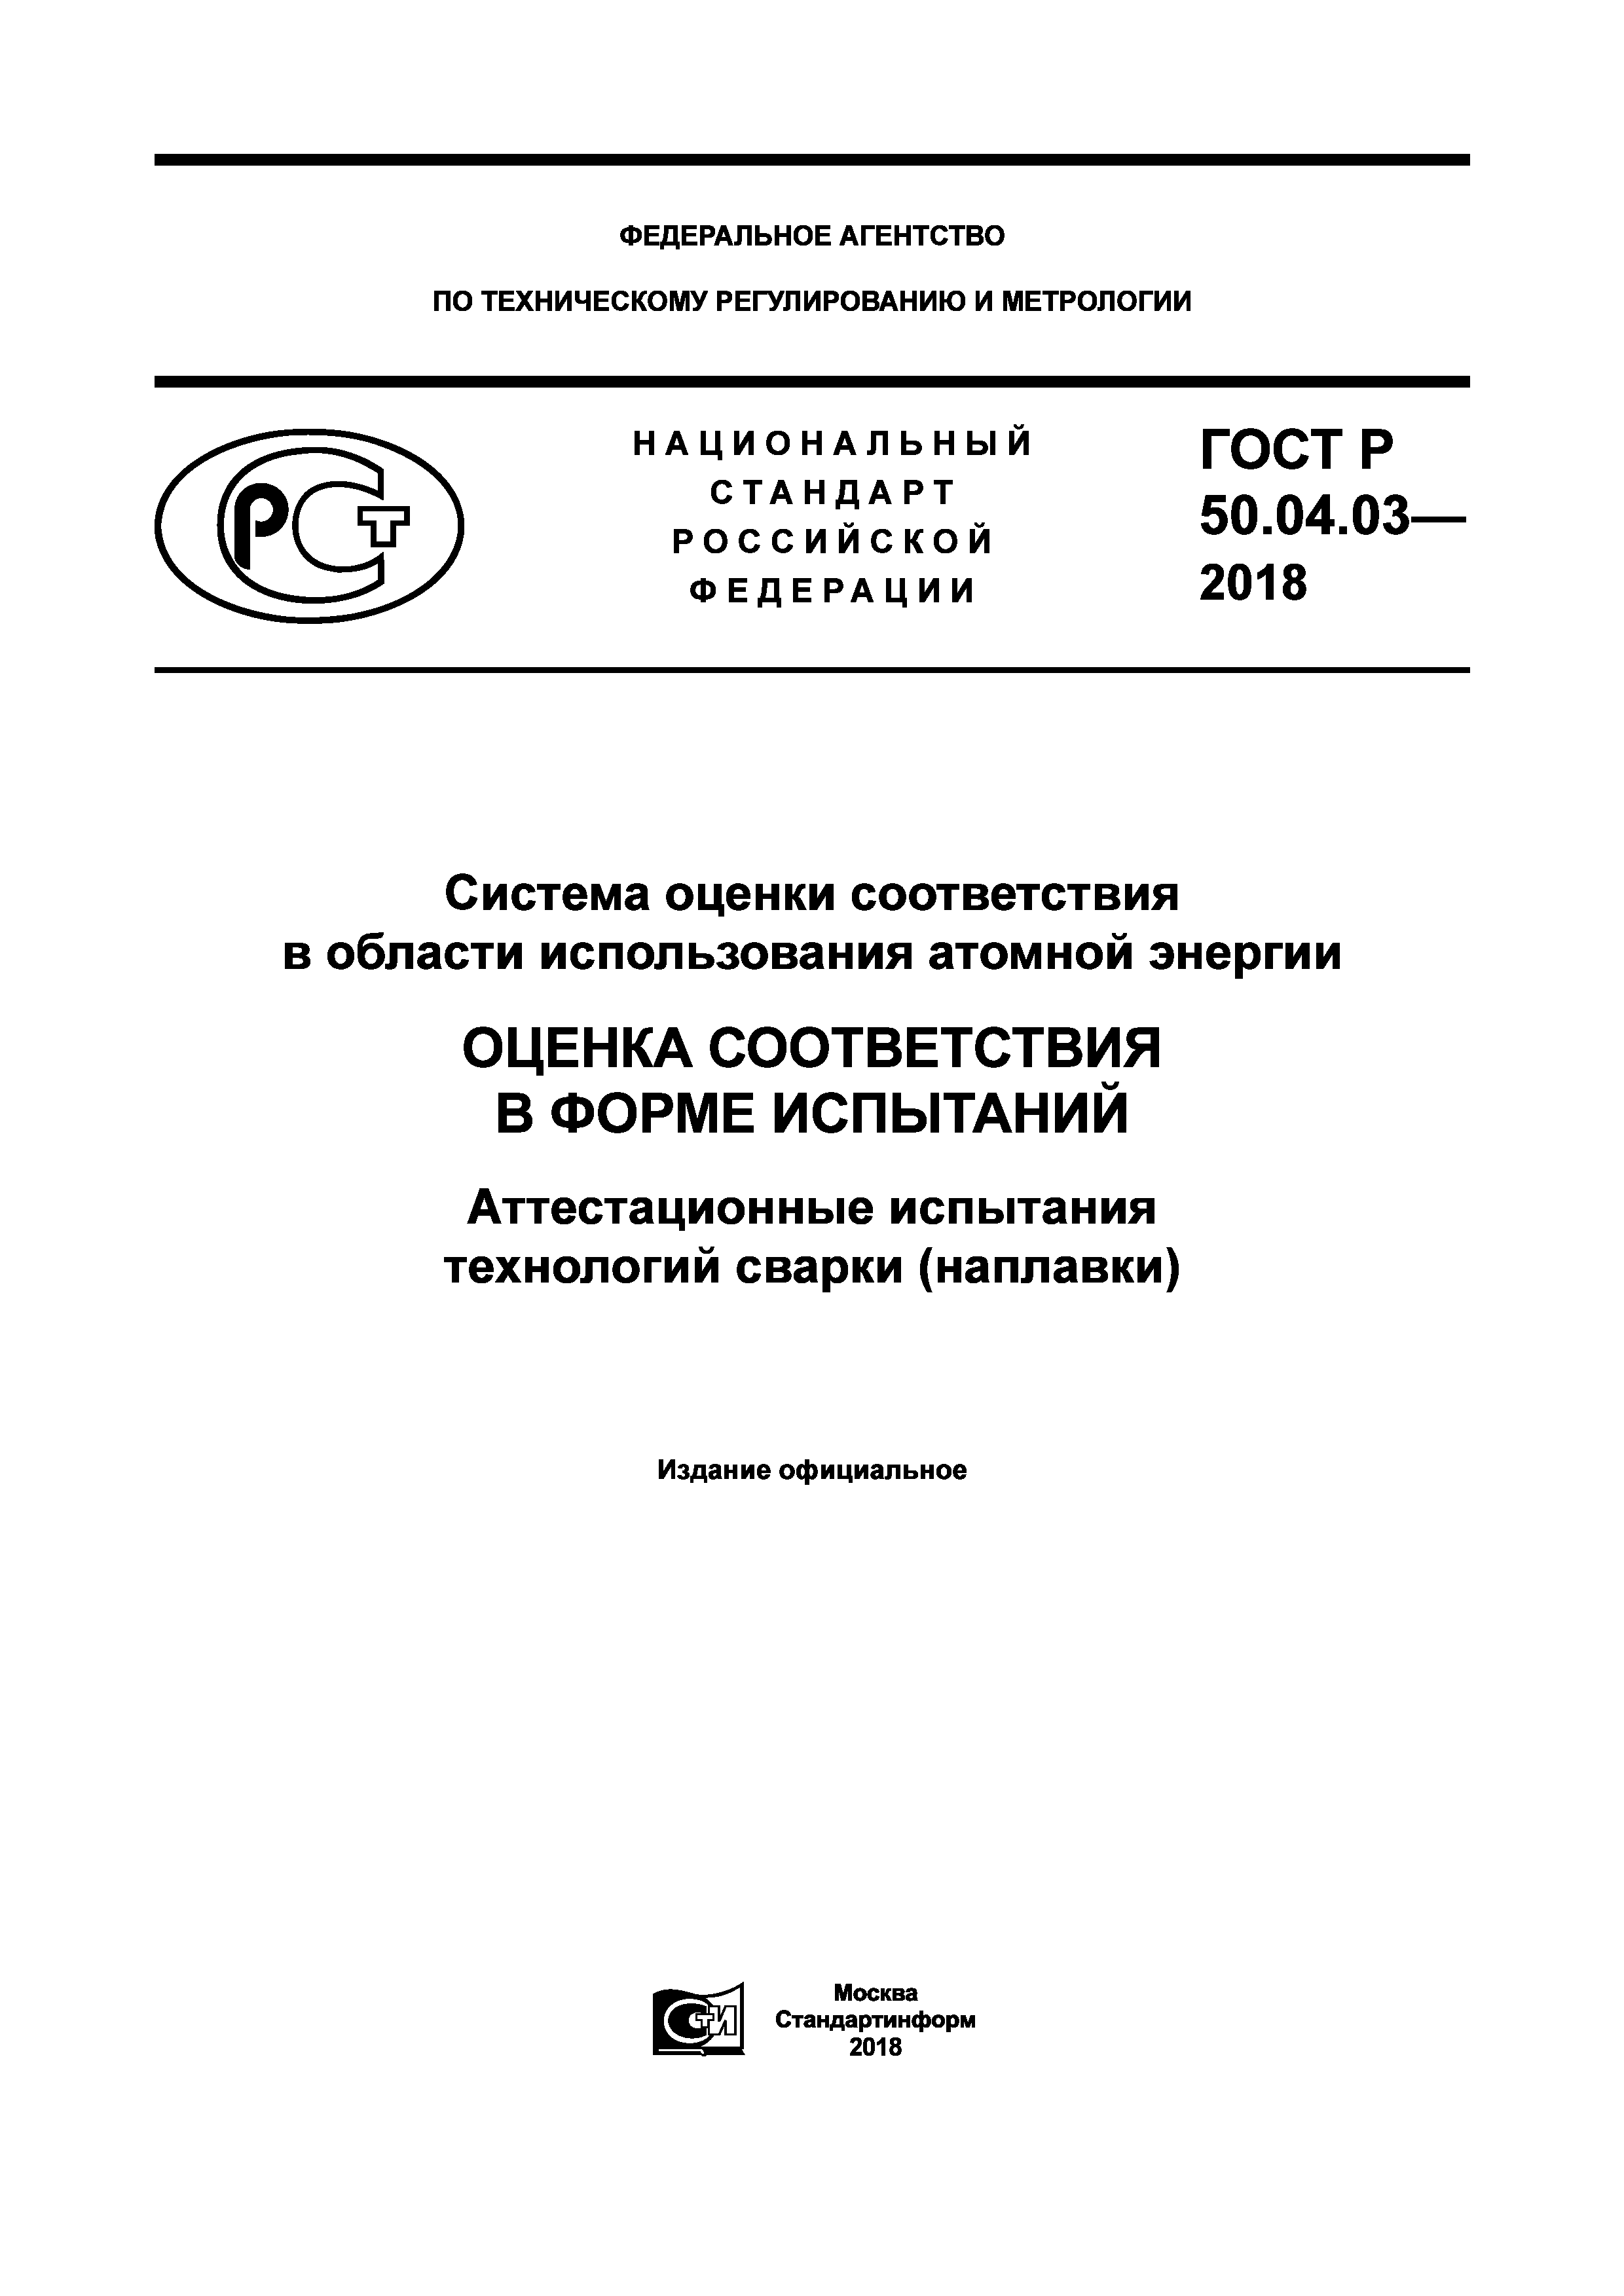 ГОСТ Р 50.04.03-2018